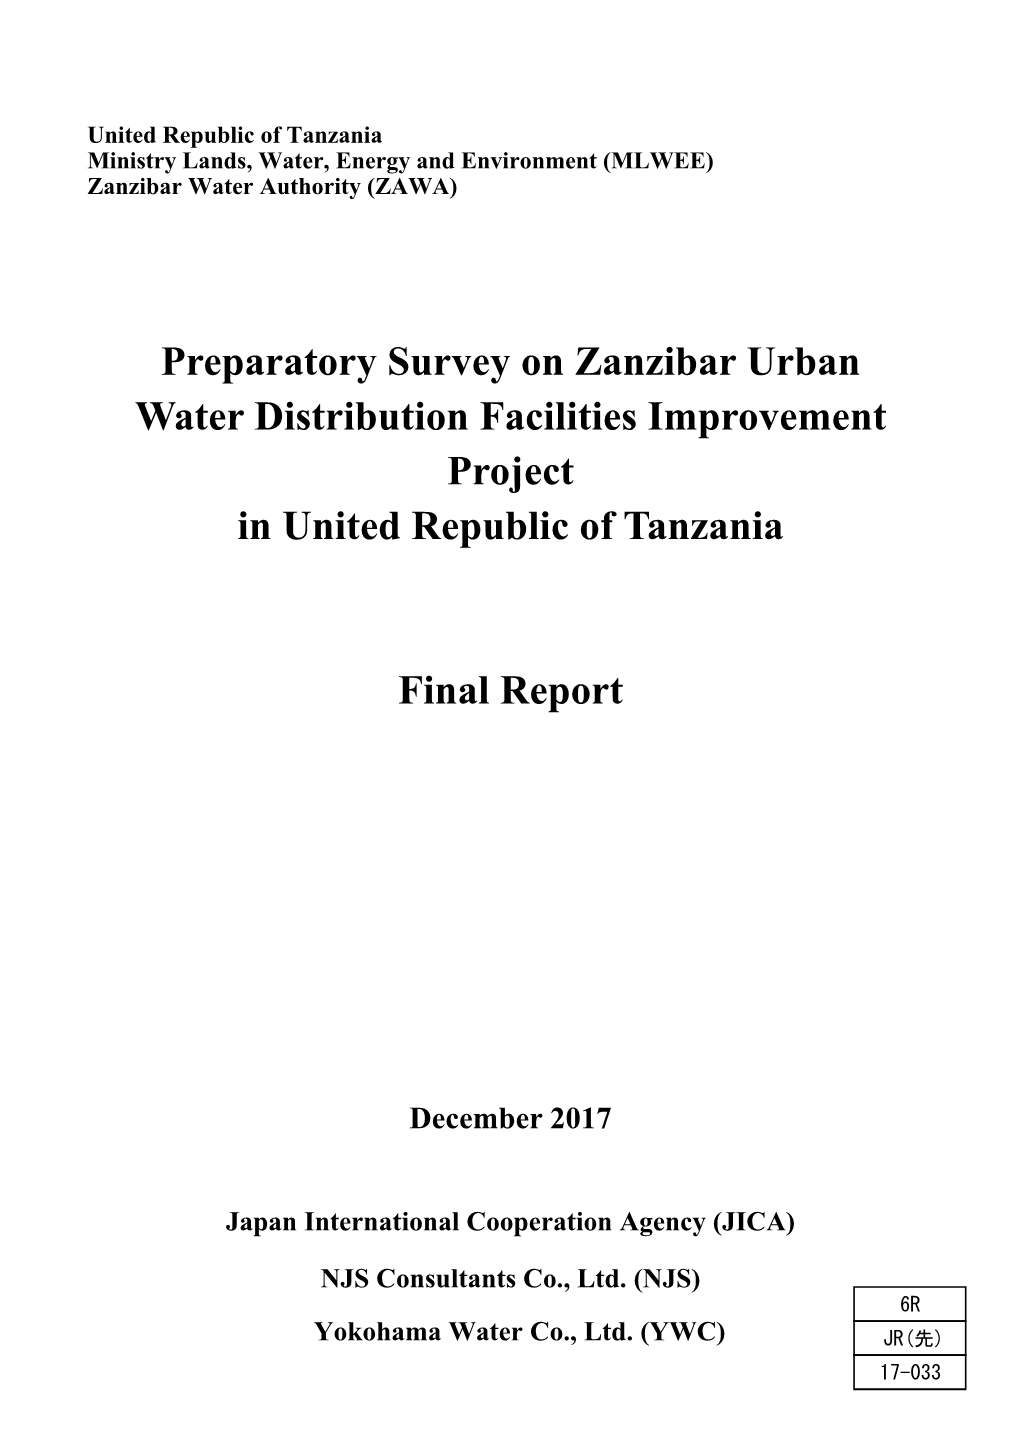 Preparatory Survey on Zanzibar Urban Water Distribution Facilities Improvement Project in United Republic of Tanzania